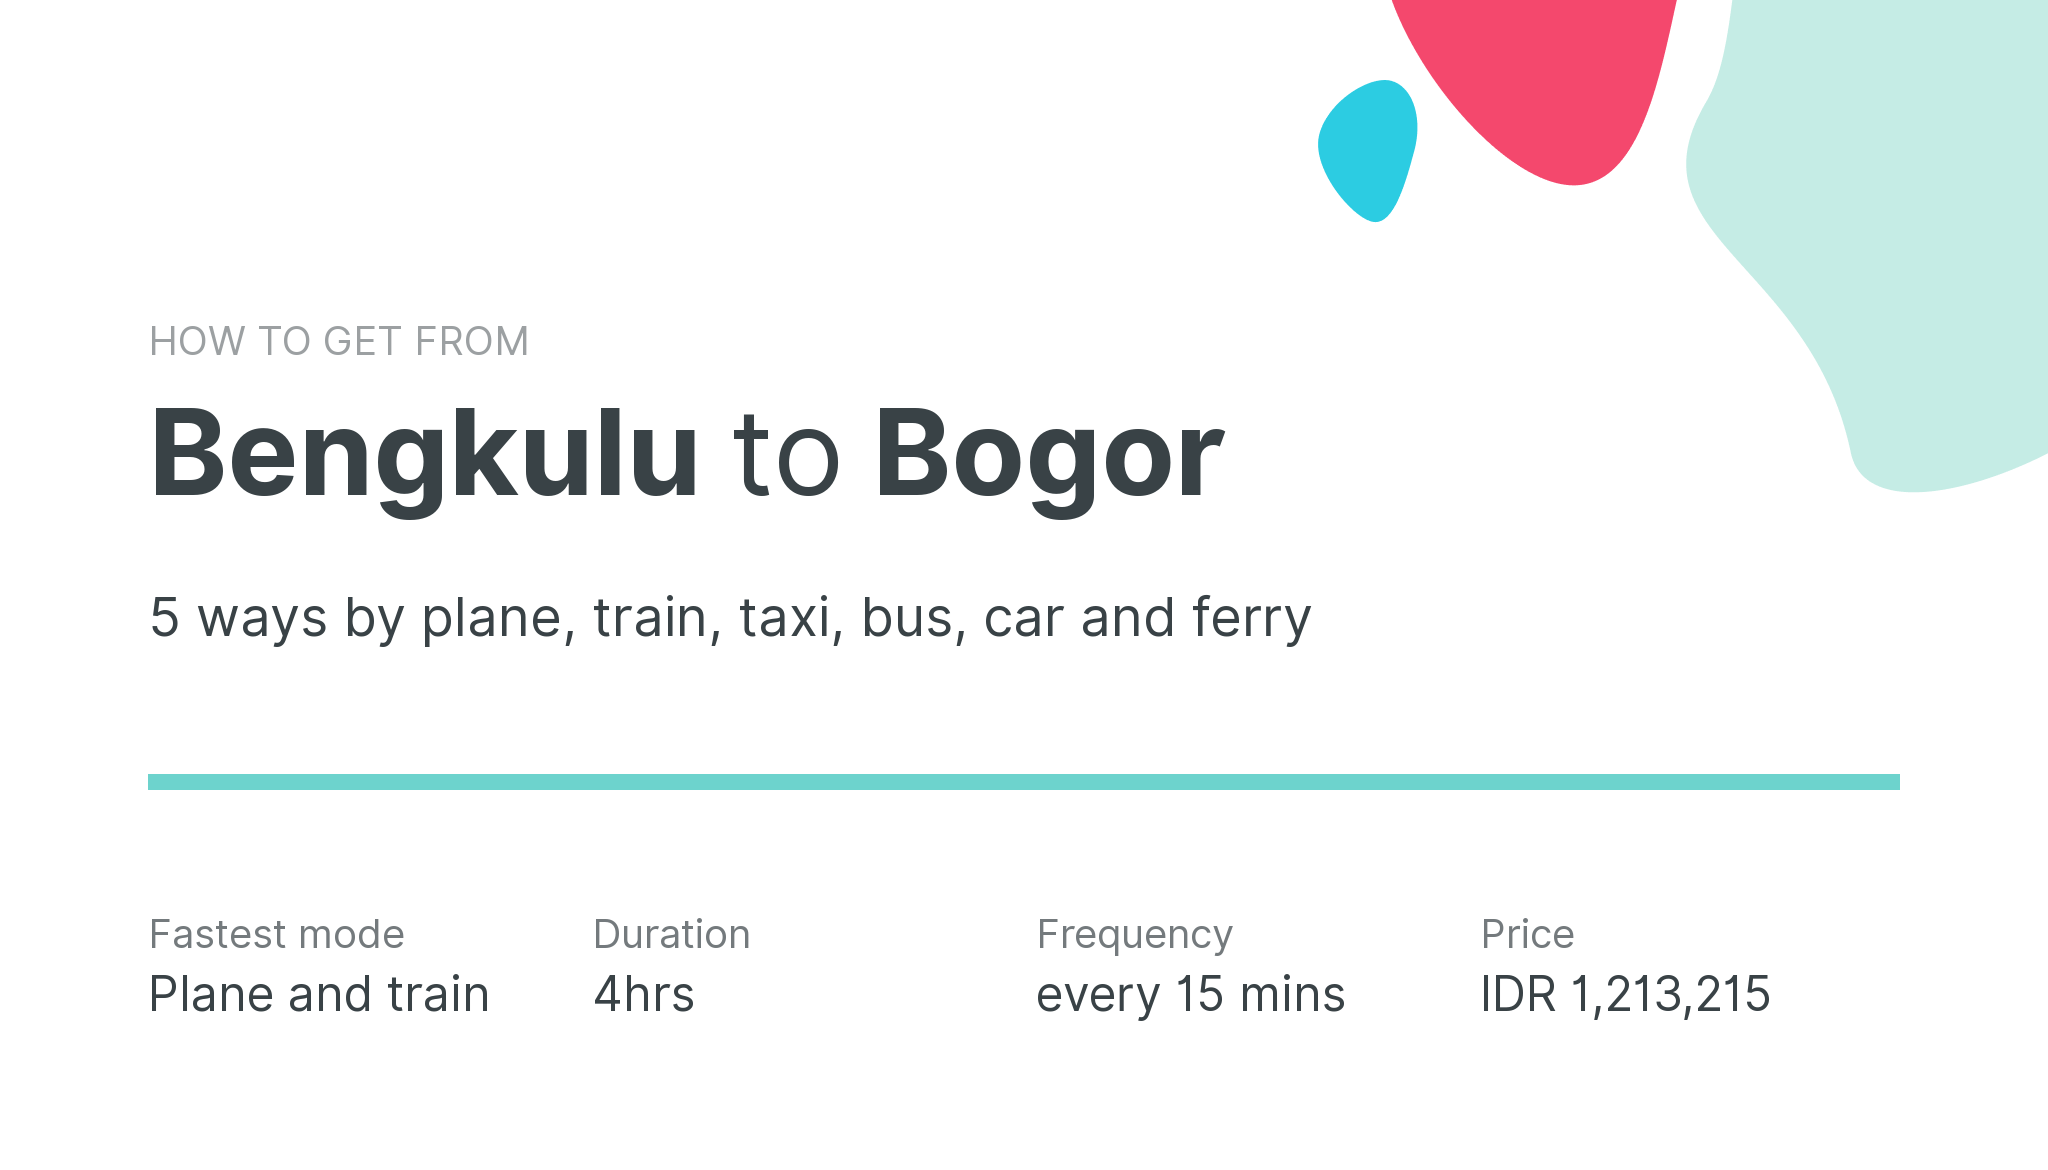 How do I get from Bengkulu to Bogor